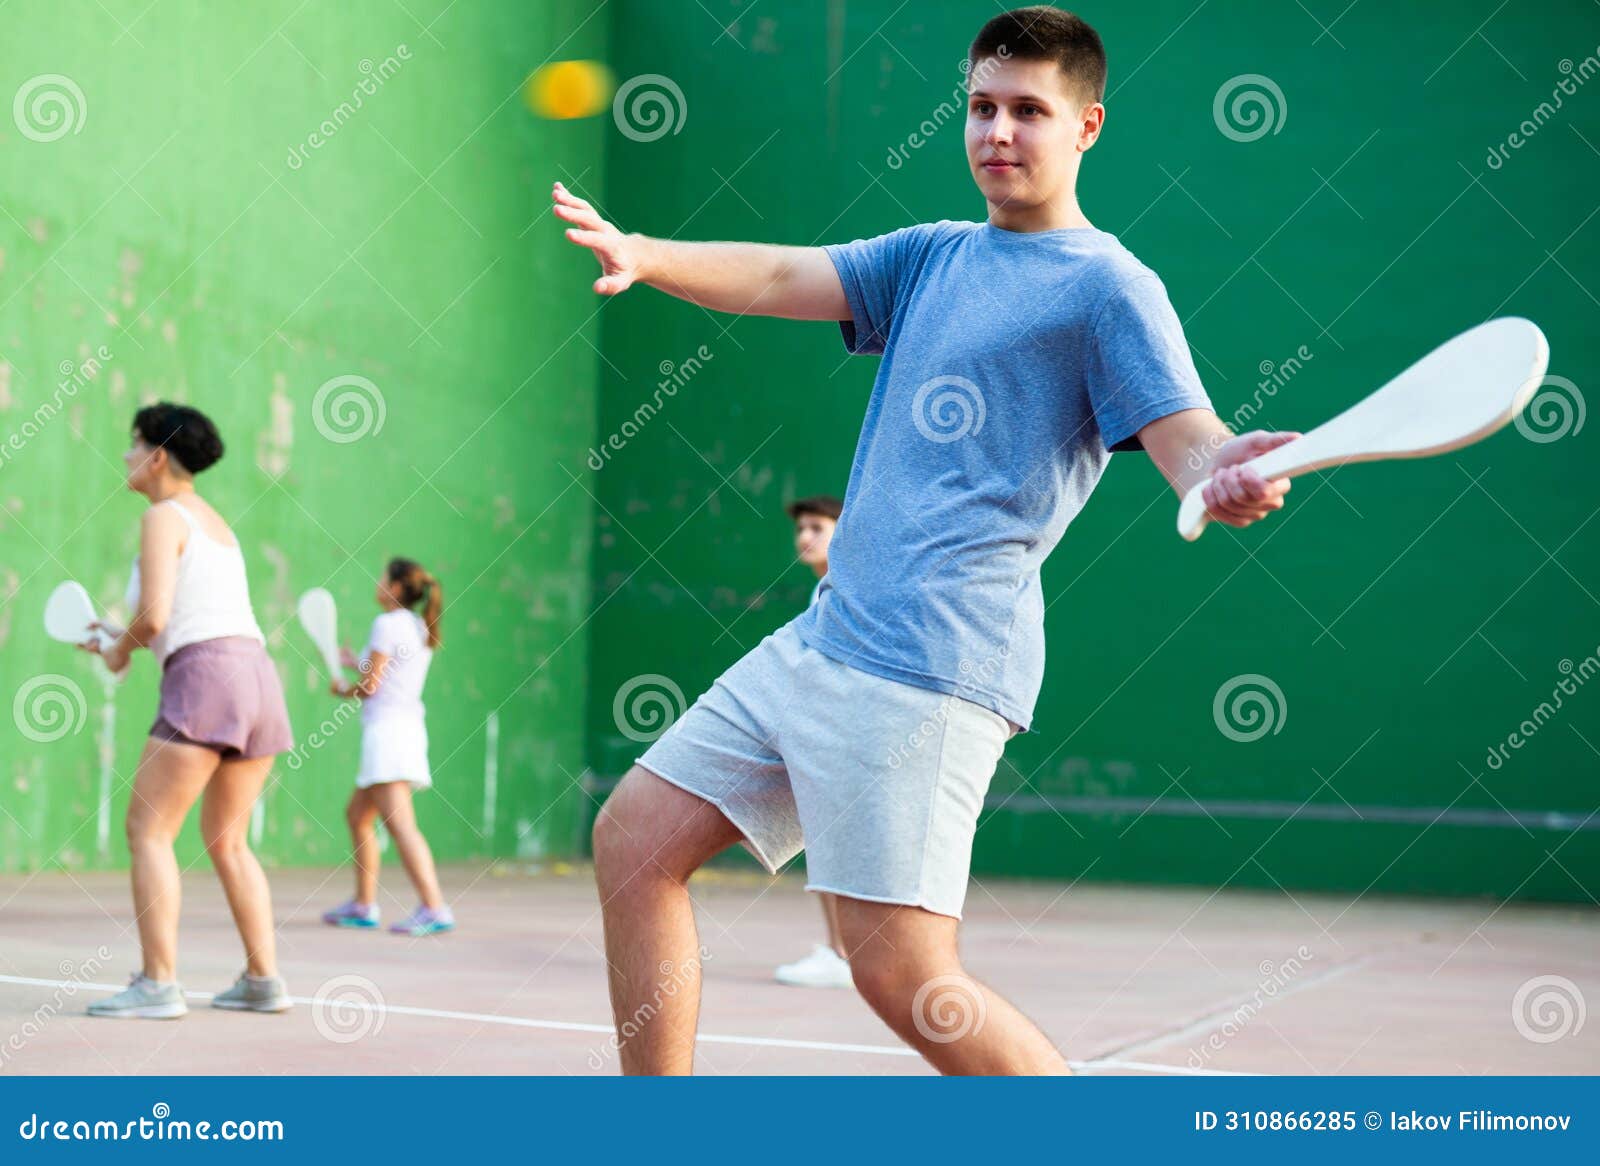 young man playing basque pelota on outdoor pelota court